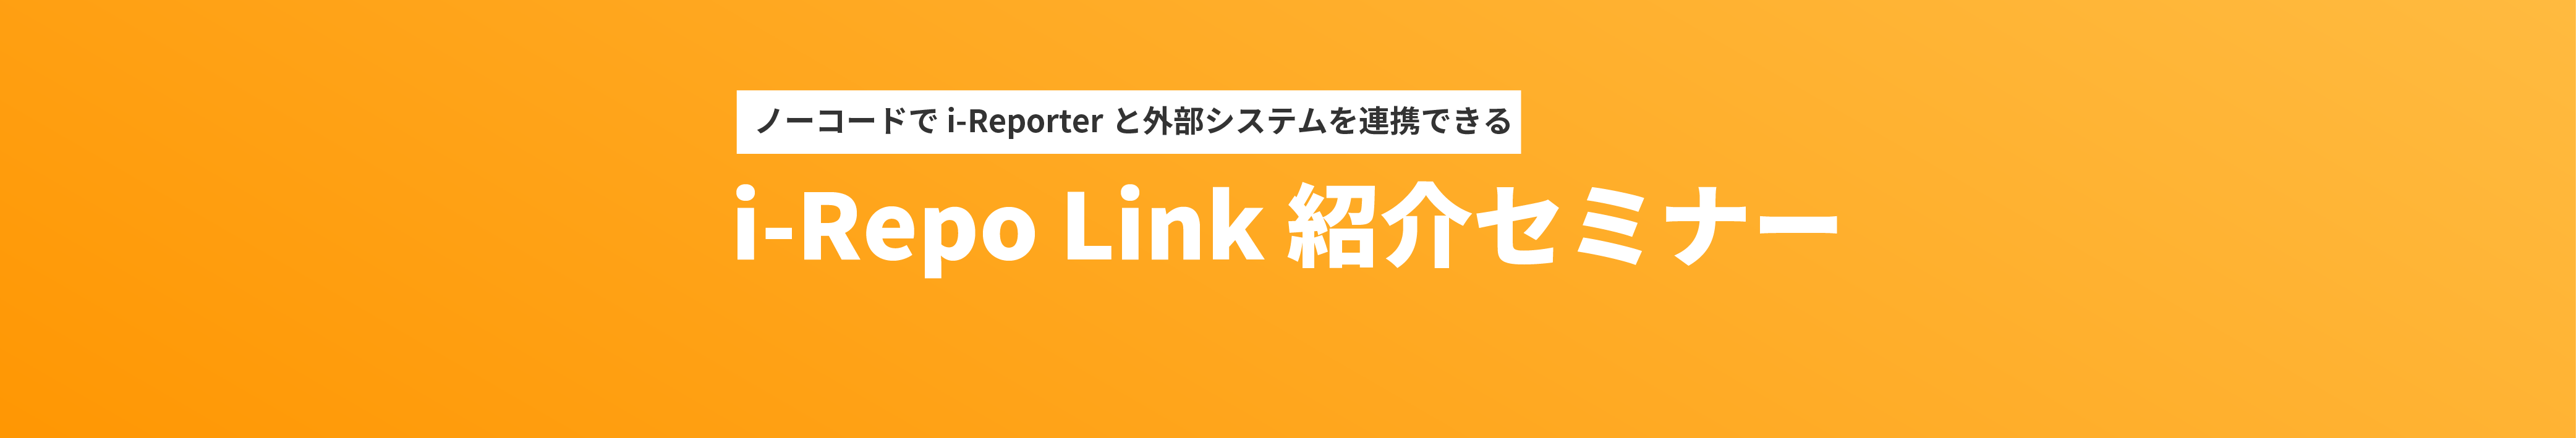 i-Repo Linkセミナーヘッダー2